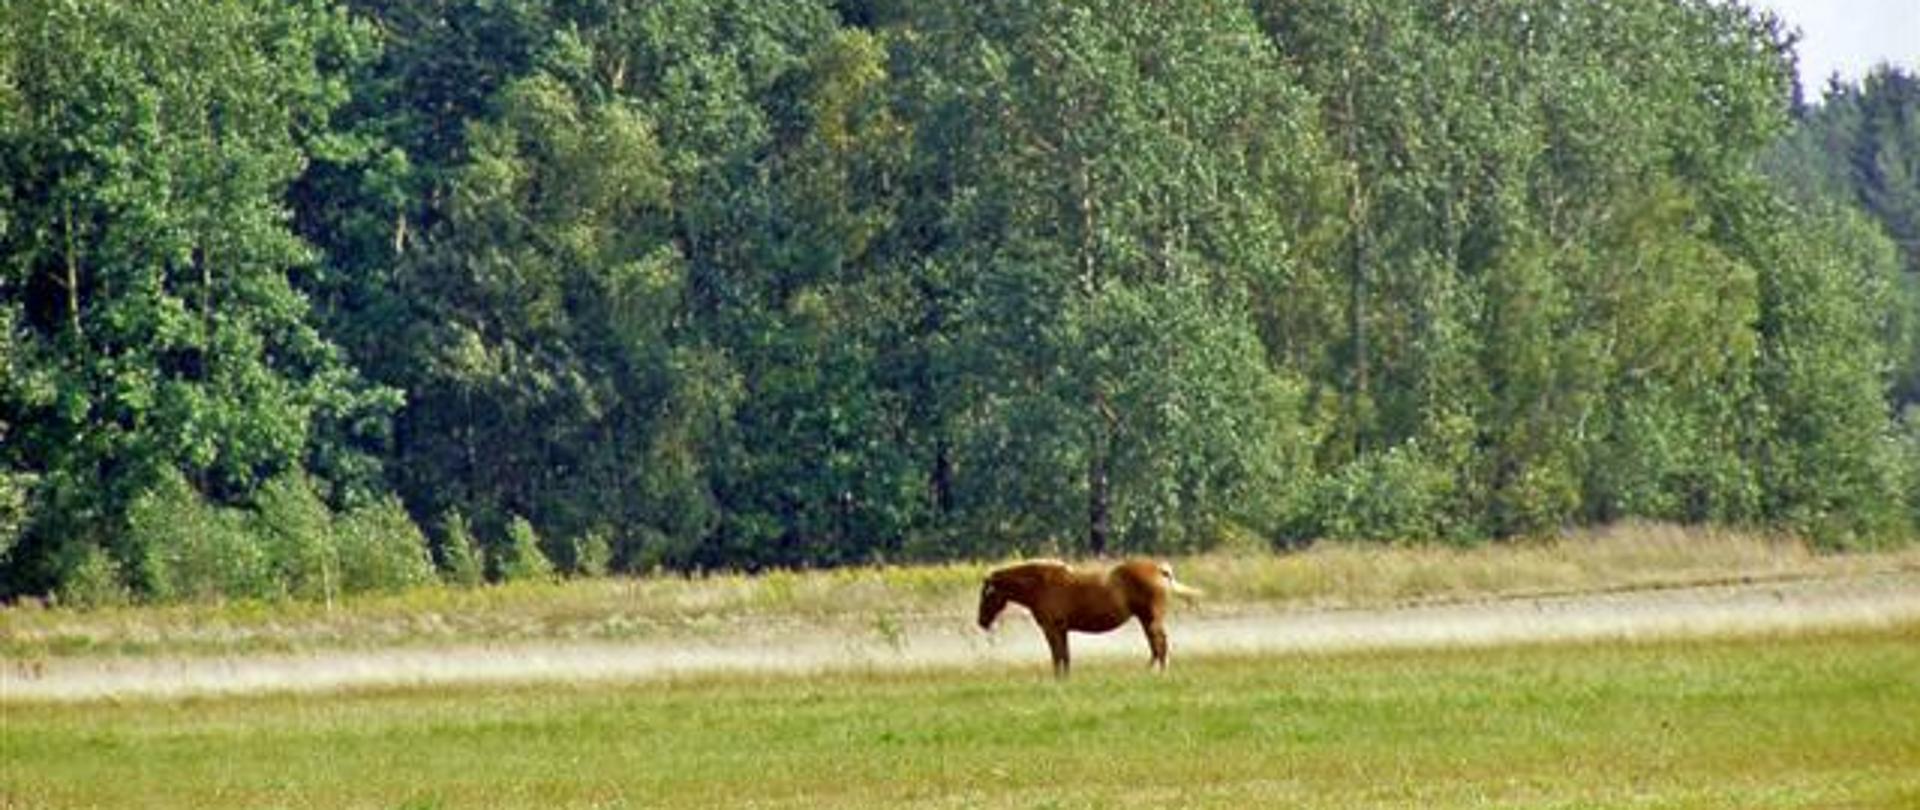 Koń domowy (Equus caballus) (fot. B. Komarzewski)
